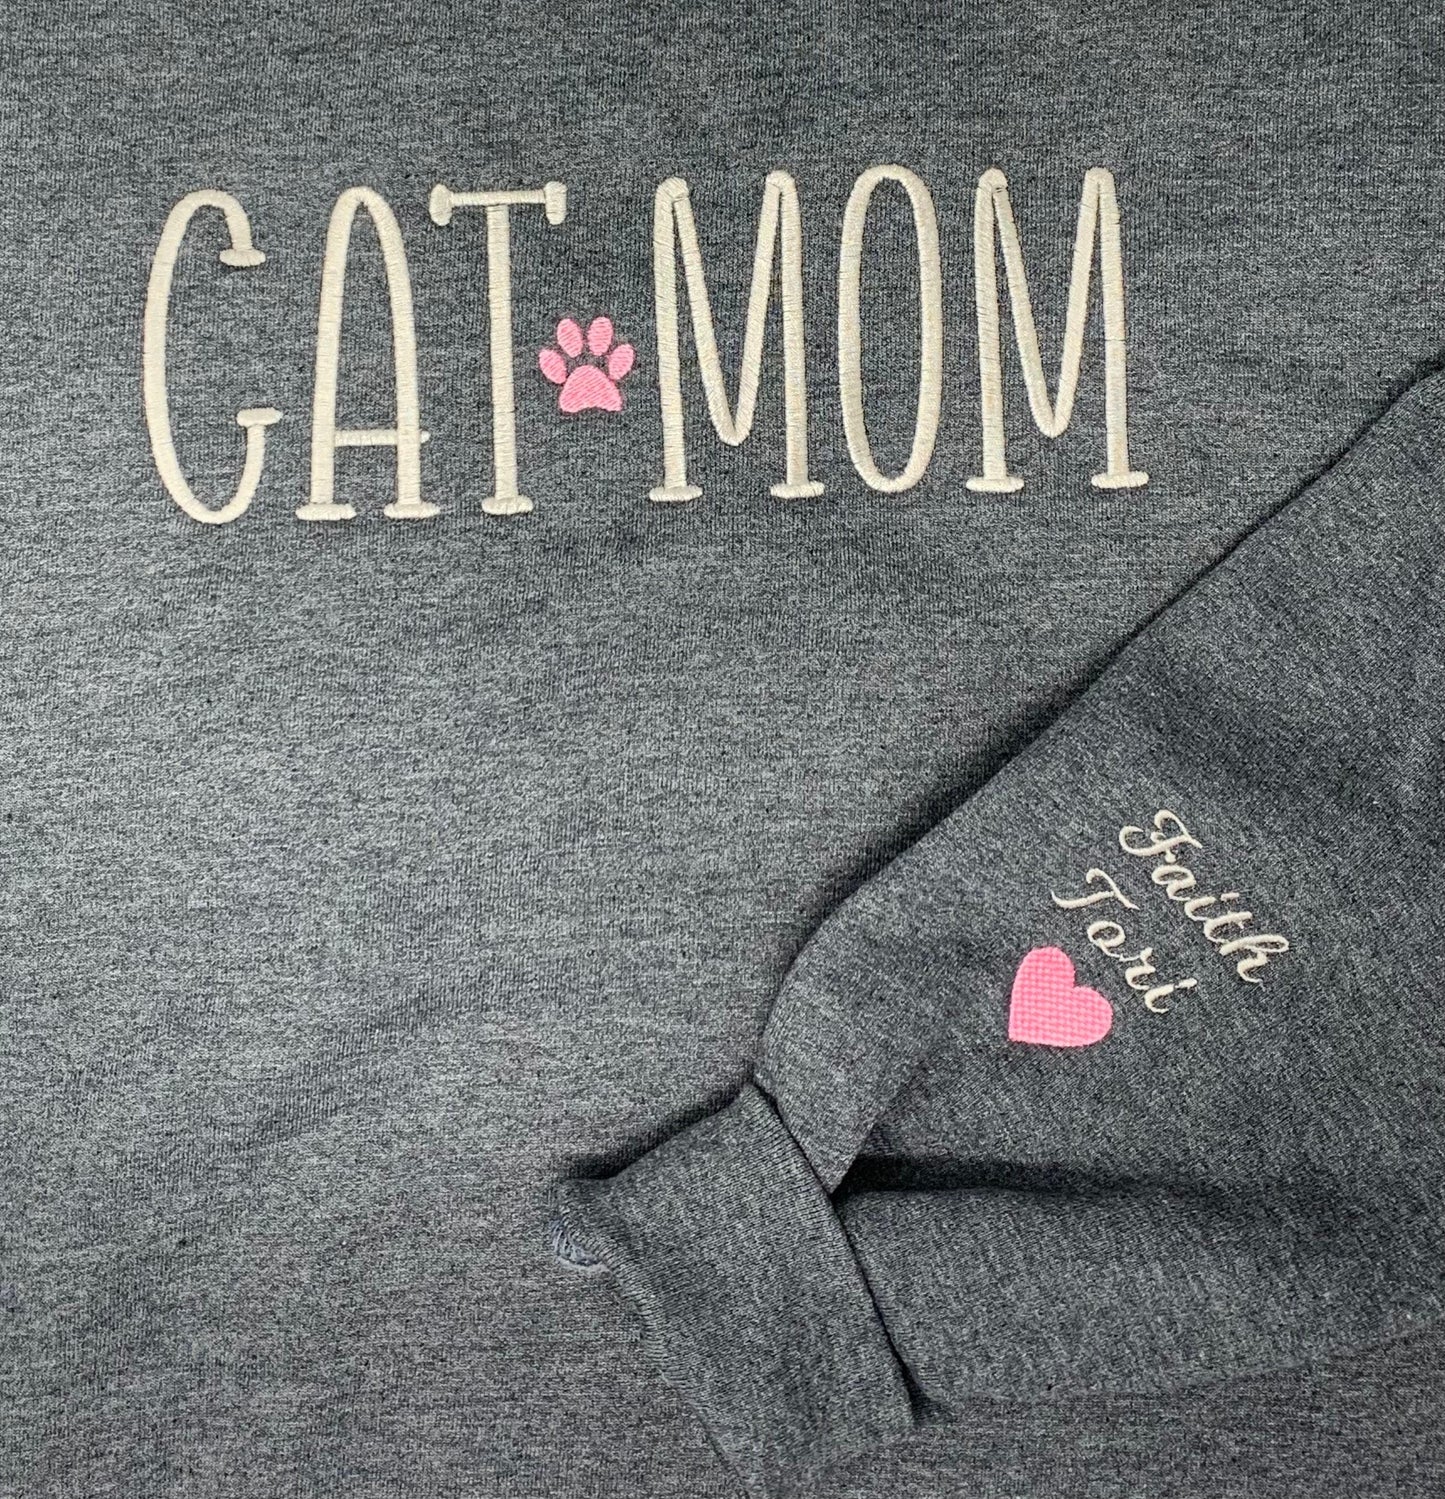 Cat Mom sweatshirt, personalized shirt, Custom embroidery, Heather Gray, Cat Lover Gift